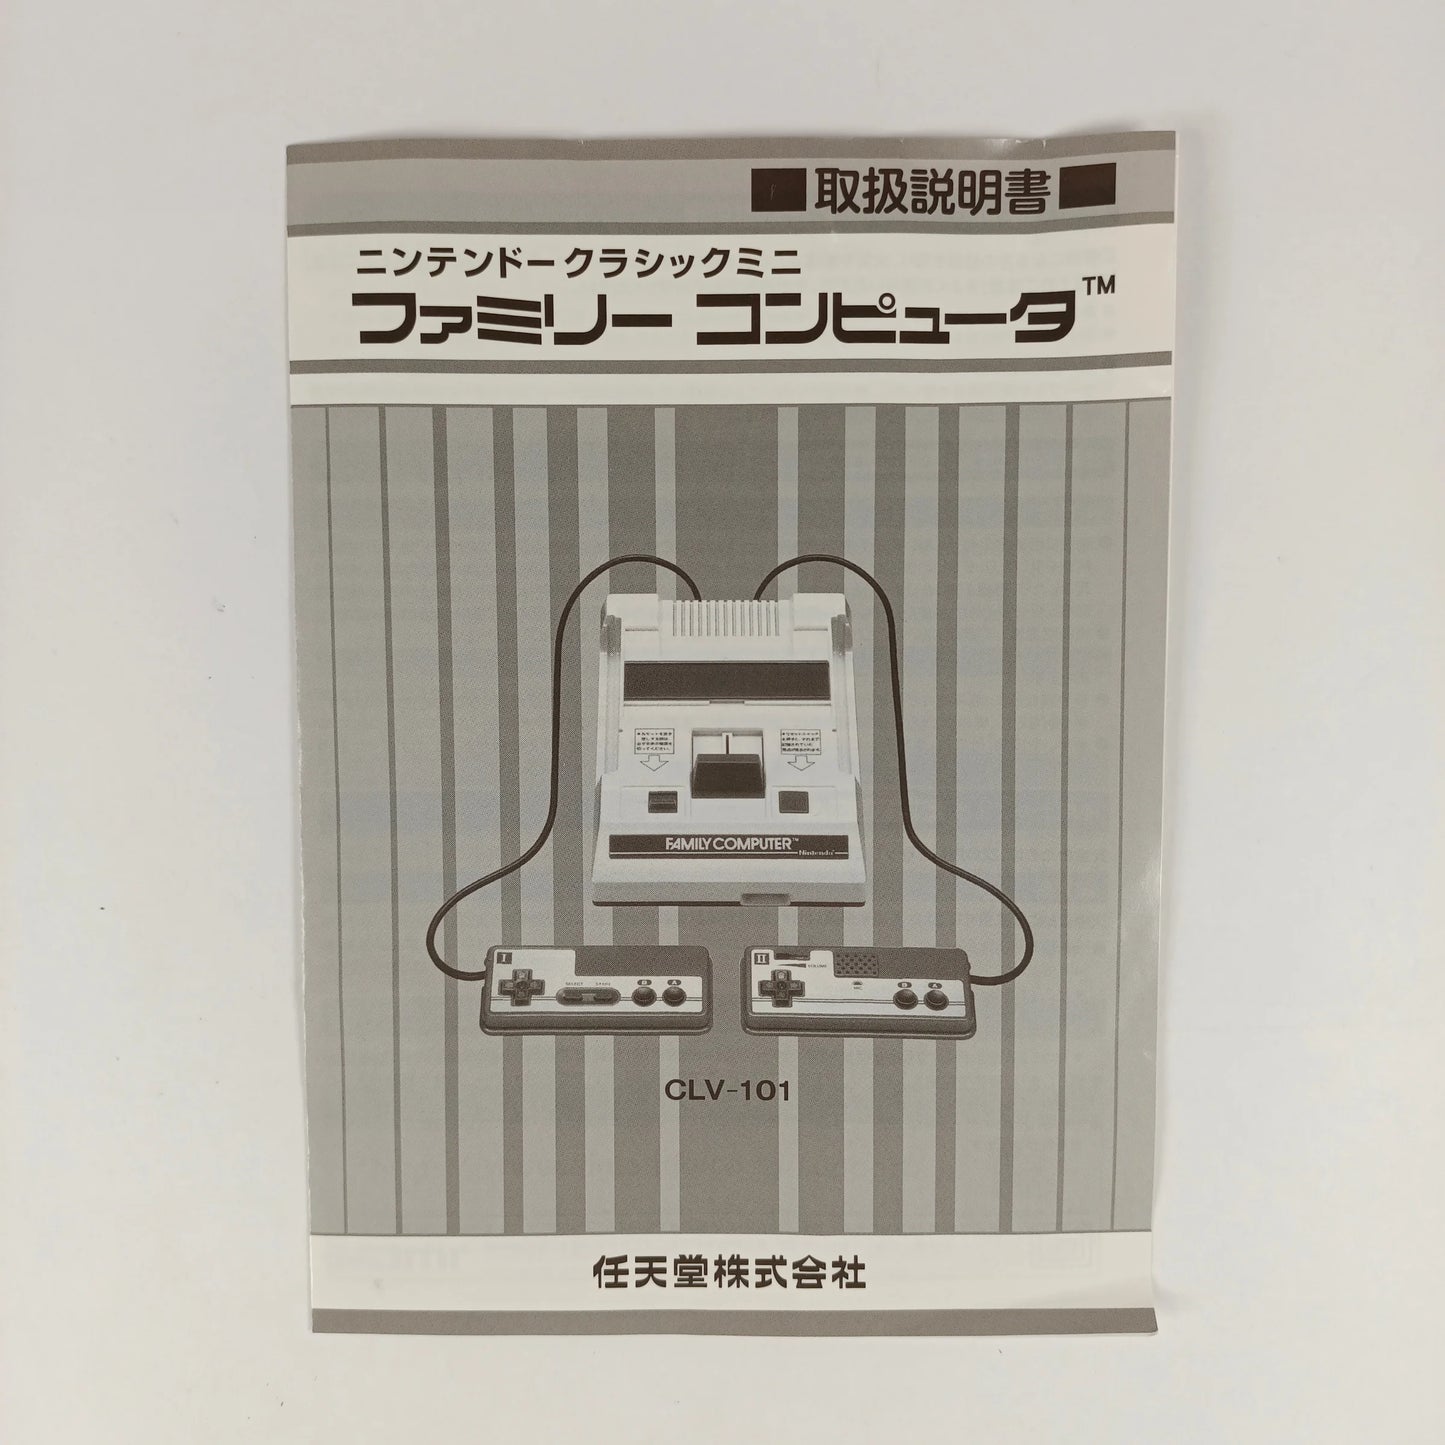 Famicom mini